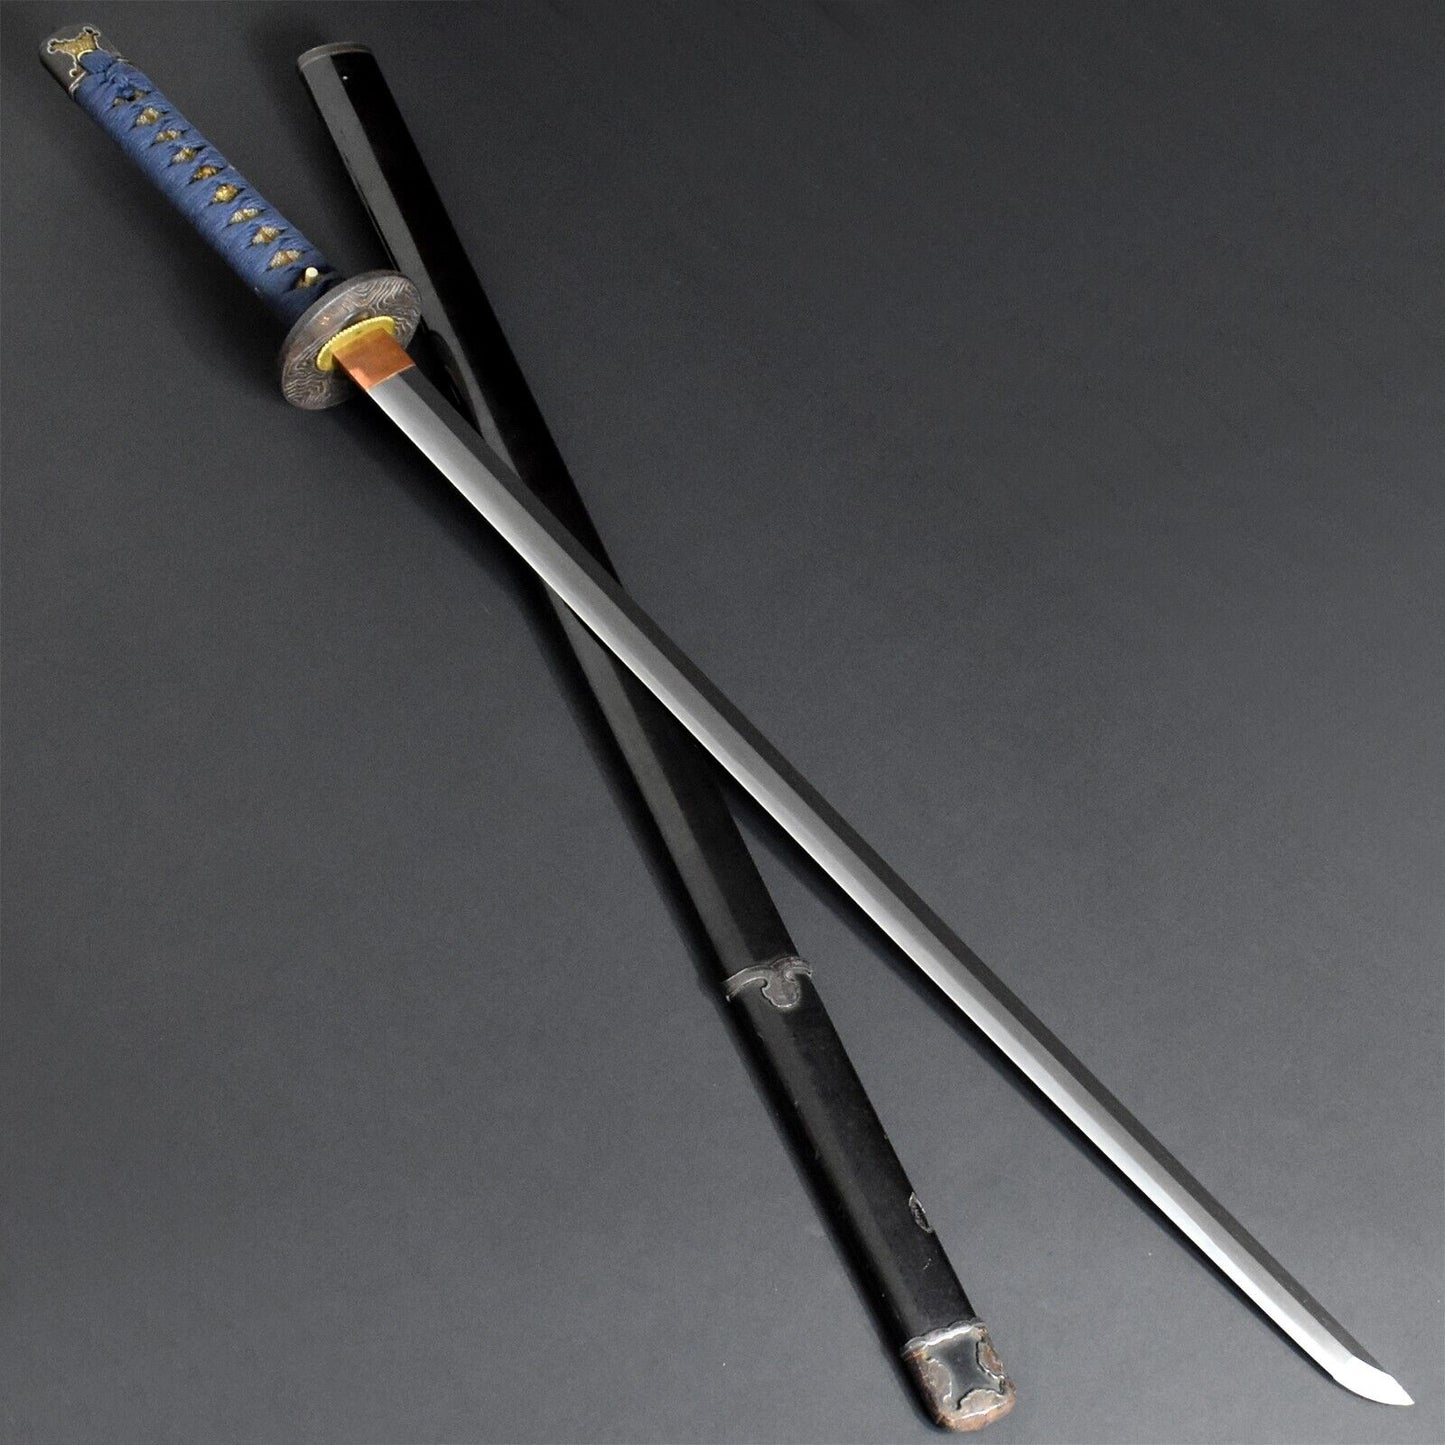 Original Vintage Japanese Sword Collectible Nihonto Katana Samurai Tamahagane Blade Edo Period Legacy Certified.